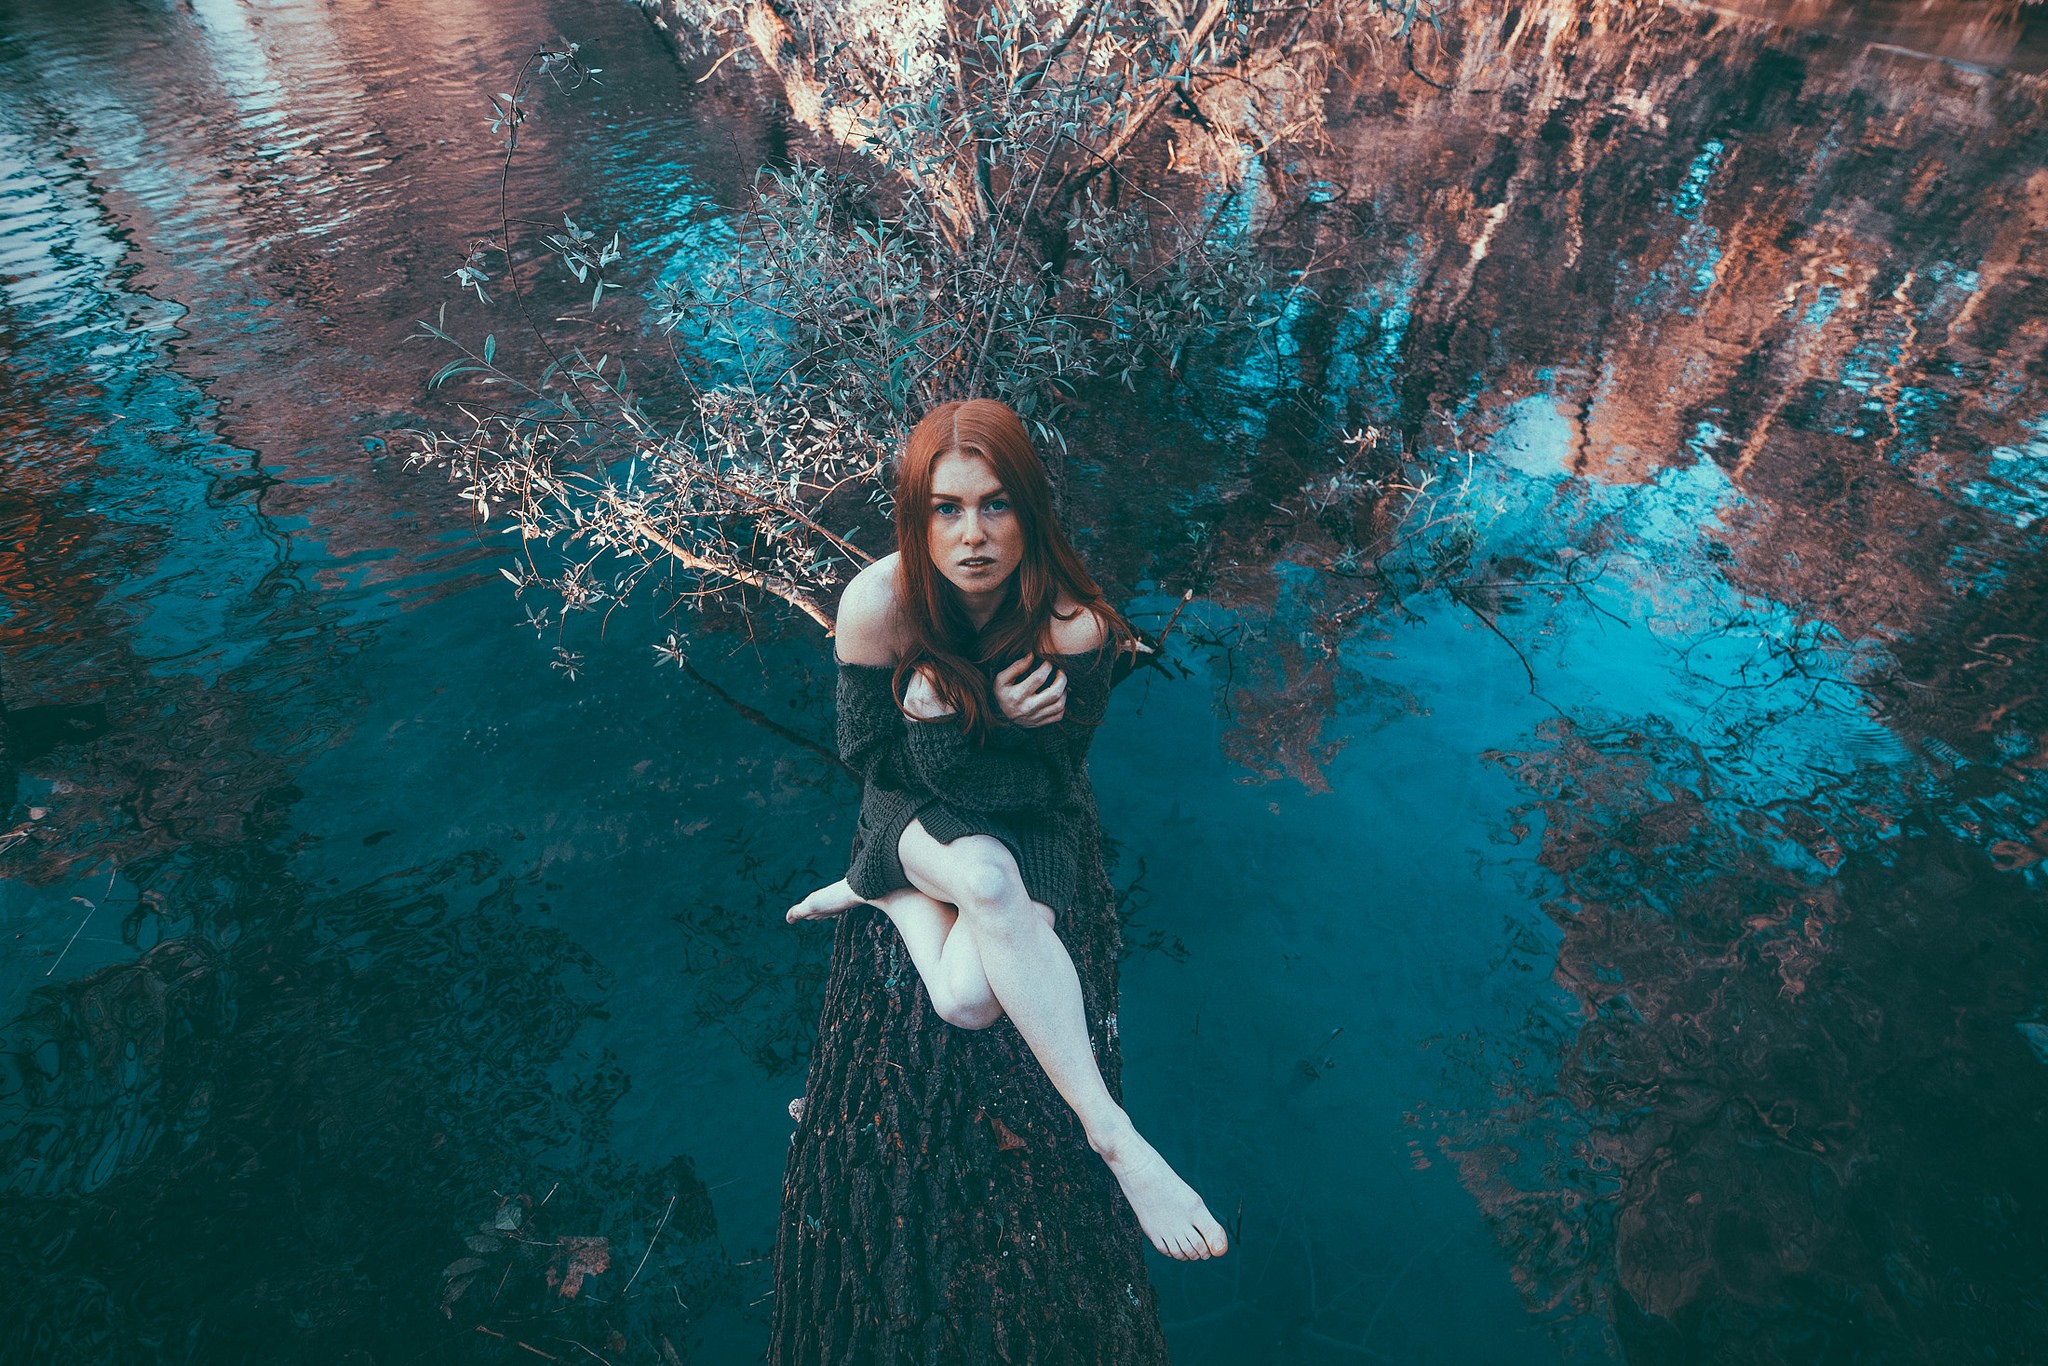 Women Redhead Legs Barefoot Bare Shoulders Hands On Chest Water Women Outdoors 2048x1366